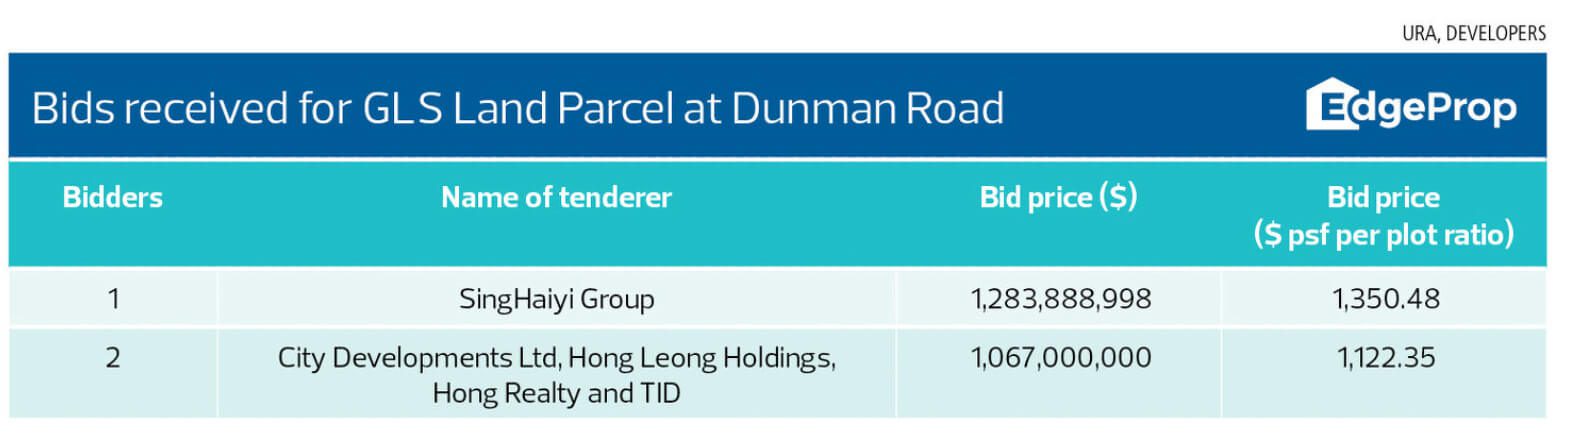 Dunman Road GLS tender results